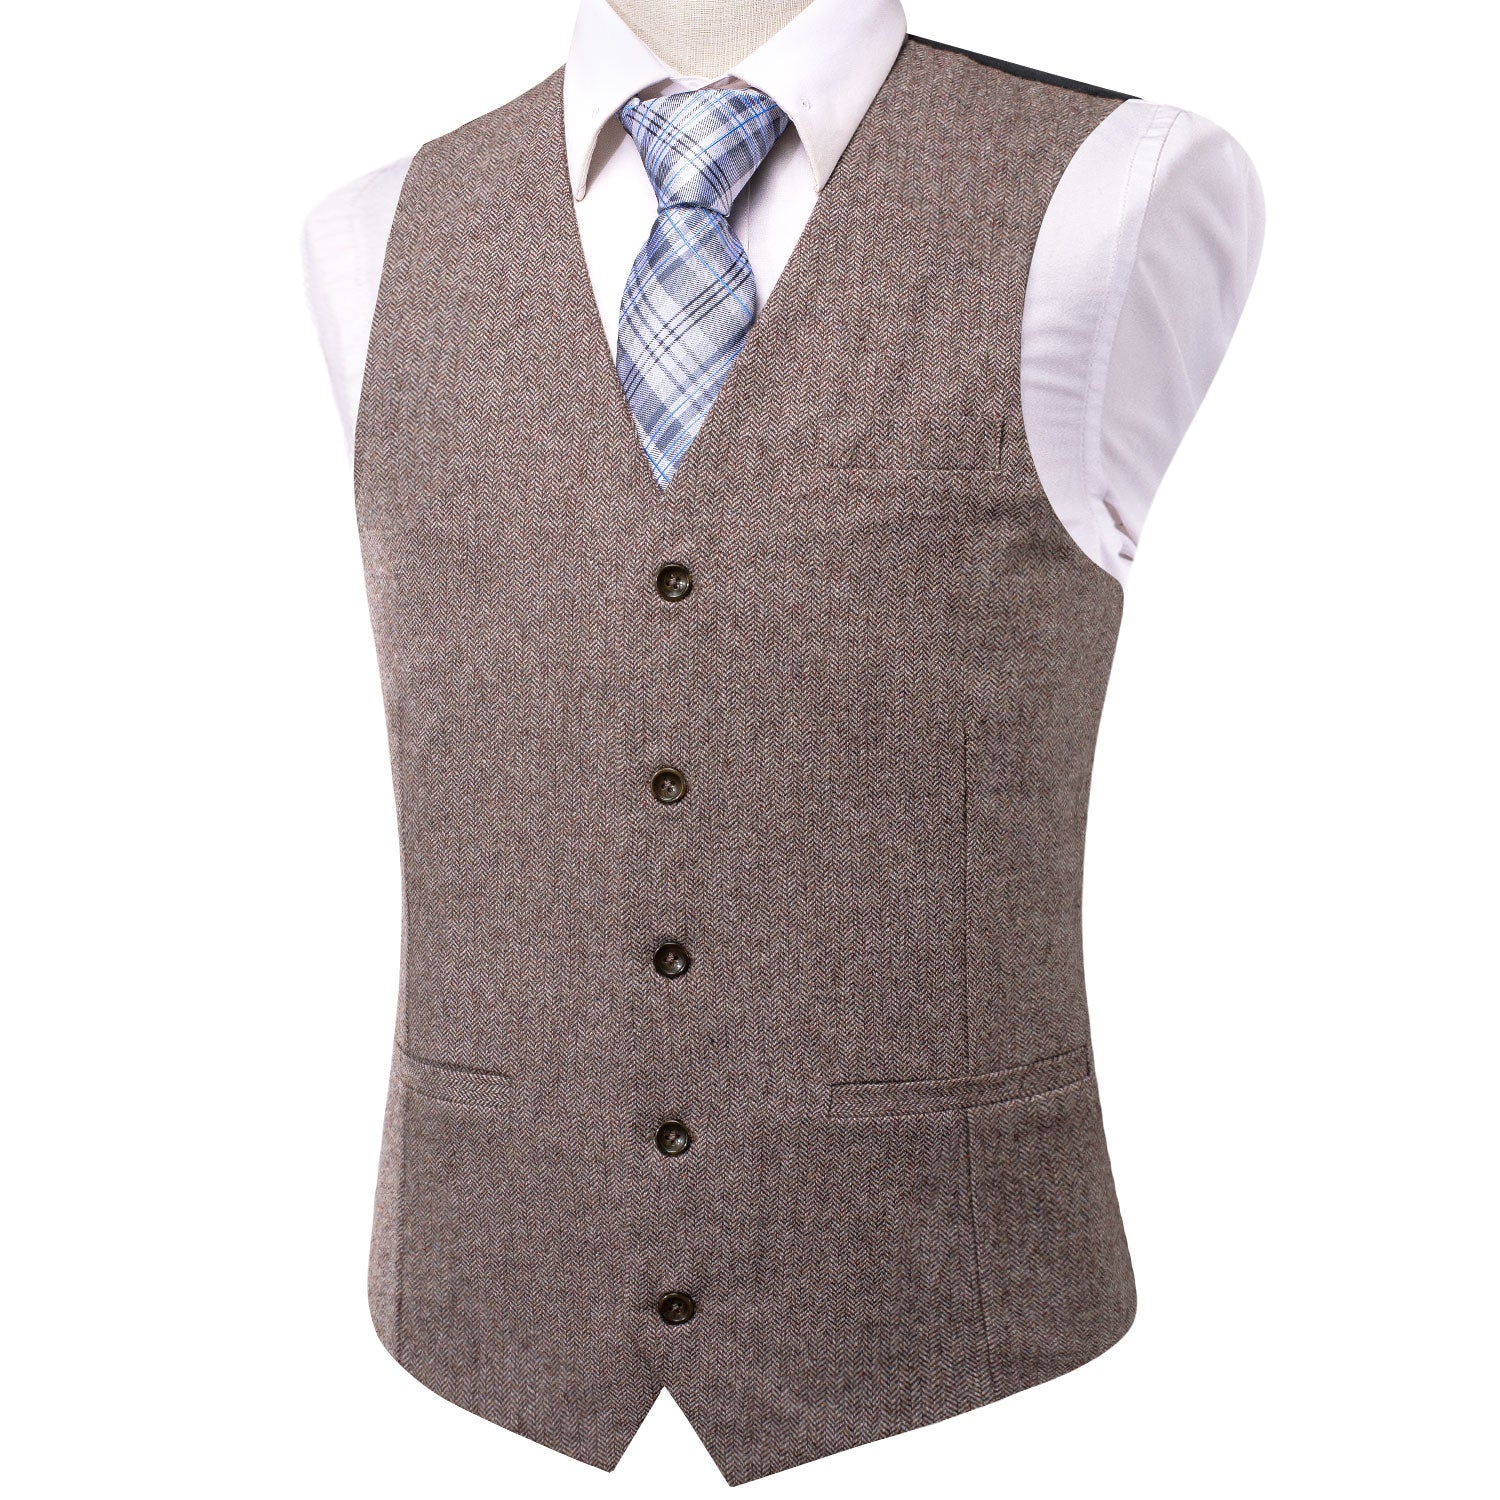 New Chocolate Brown Solid Wool Men's Single Vest Waistcoat